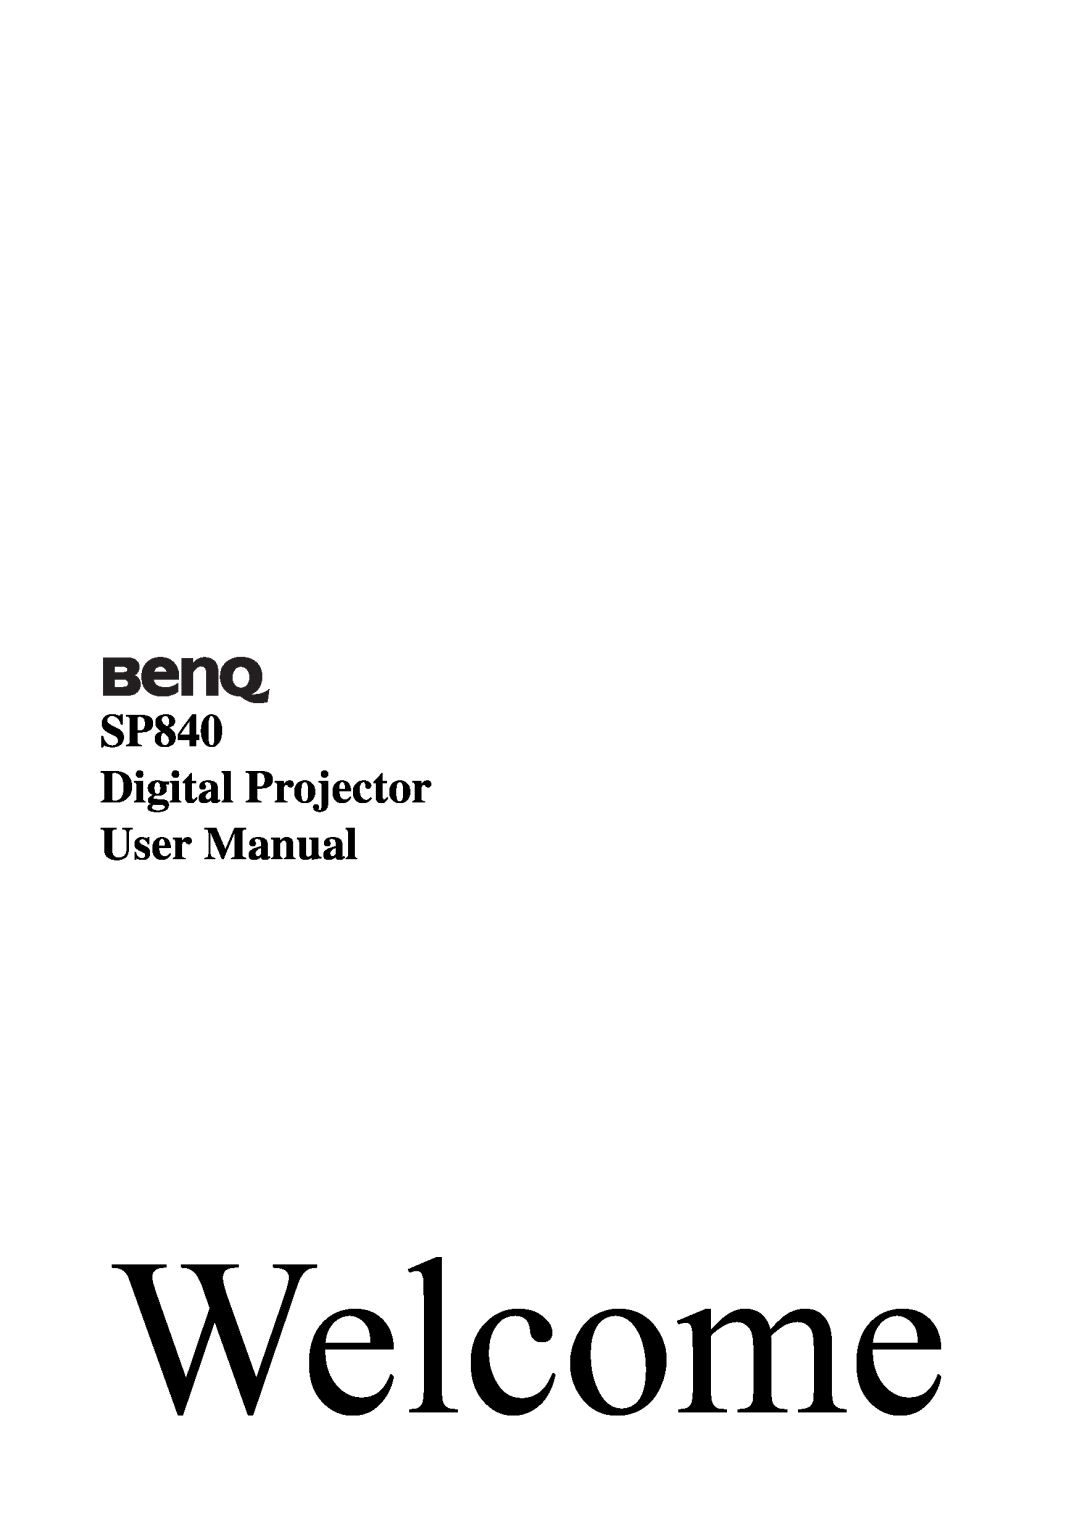 BenQ user manual SP840 Digital Projector User Manual, Welcome 